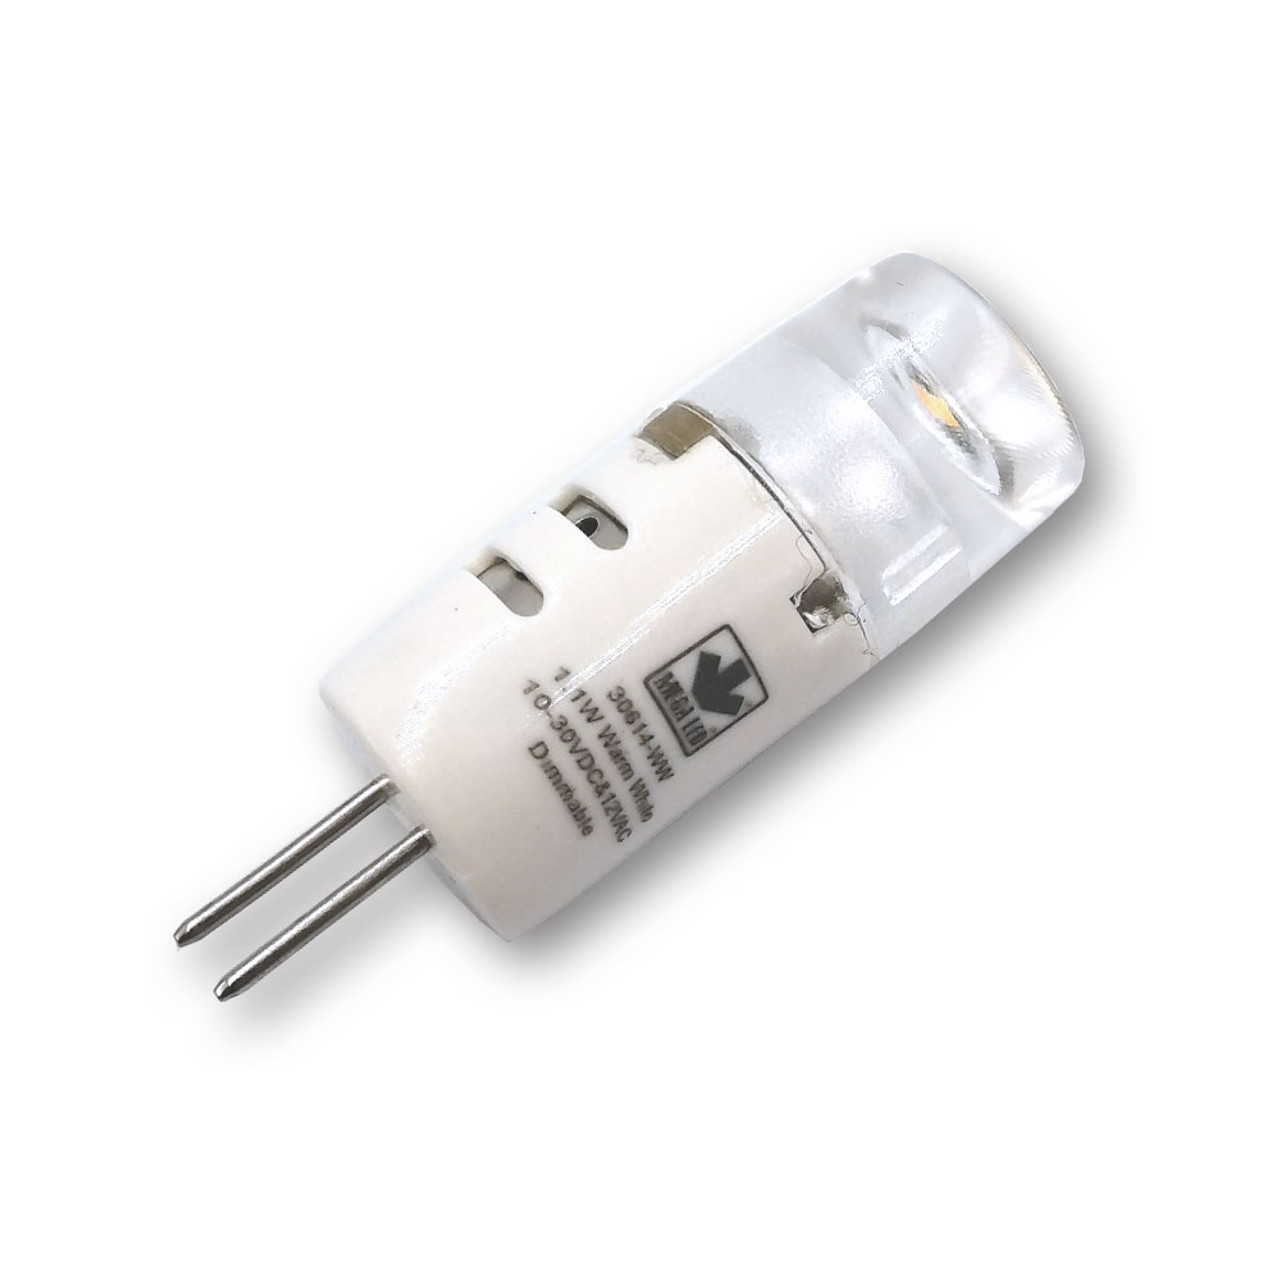 Mega LED - G4 LED Replacement Bulb - 1.1 Watt, 110 Lumens, Low Voltage - Apollo Lighting